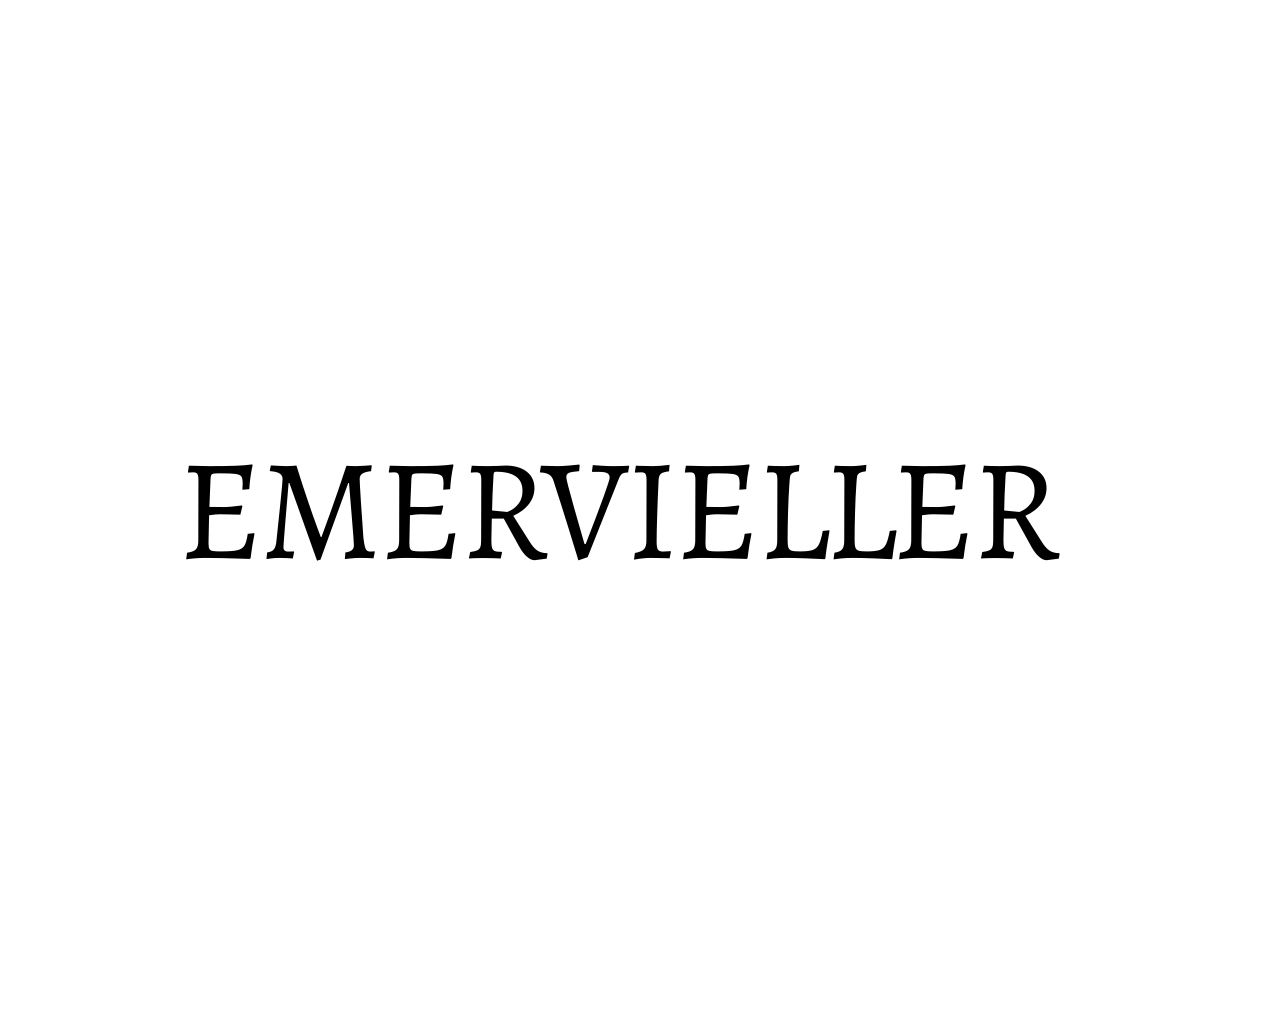 EMERVIELLER's web page